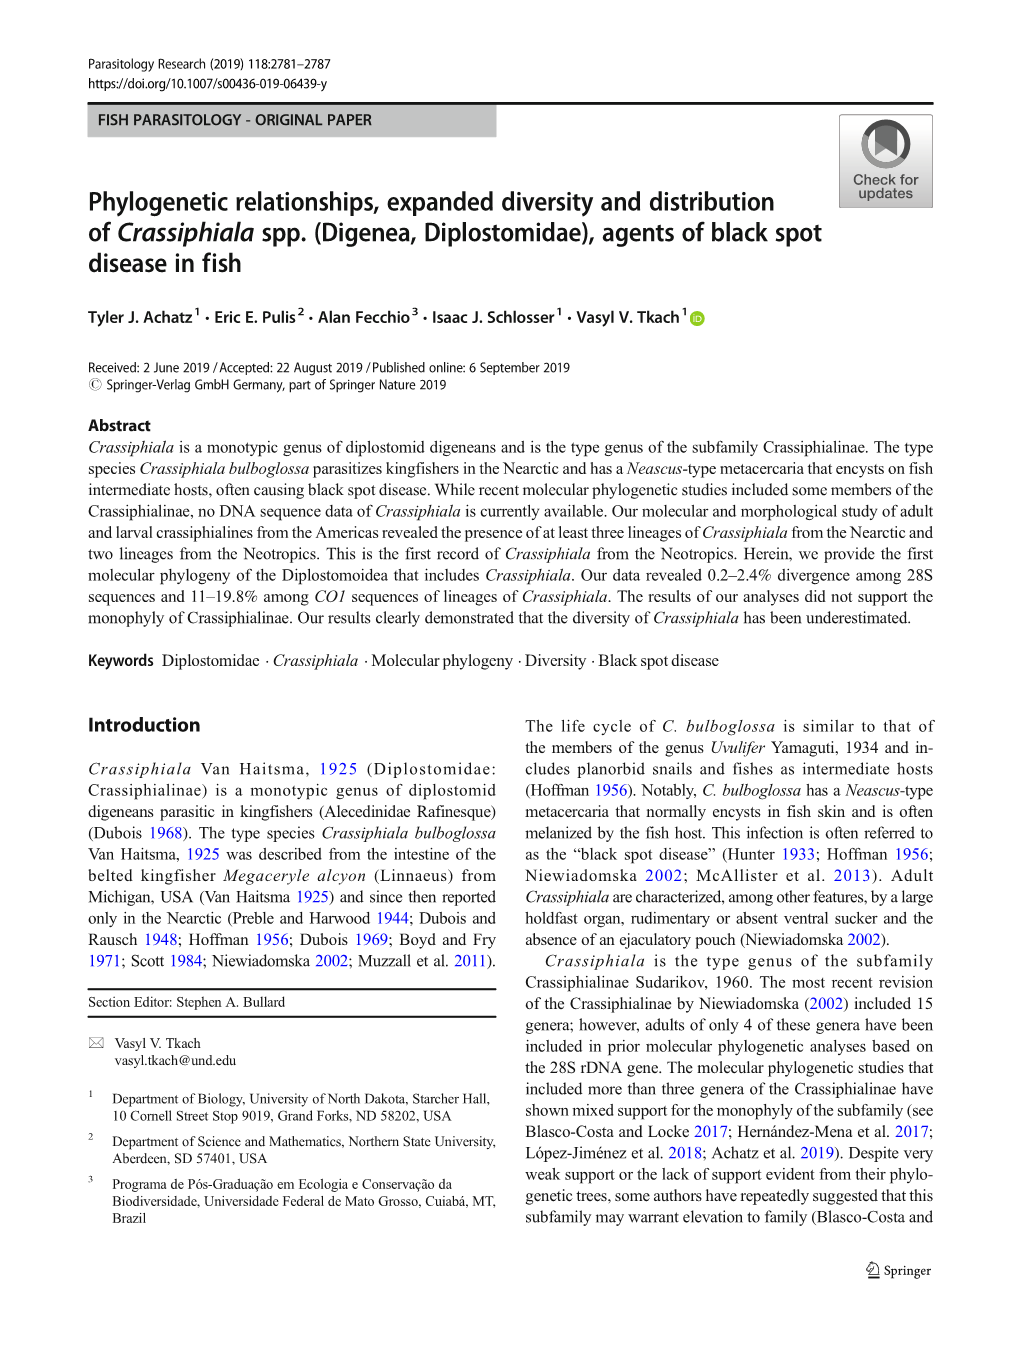 Digenea, Diplostomidae), Agents of Black Spot Disease in Fish